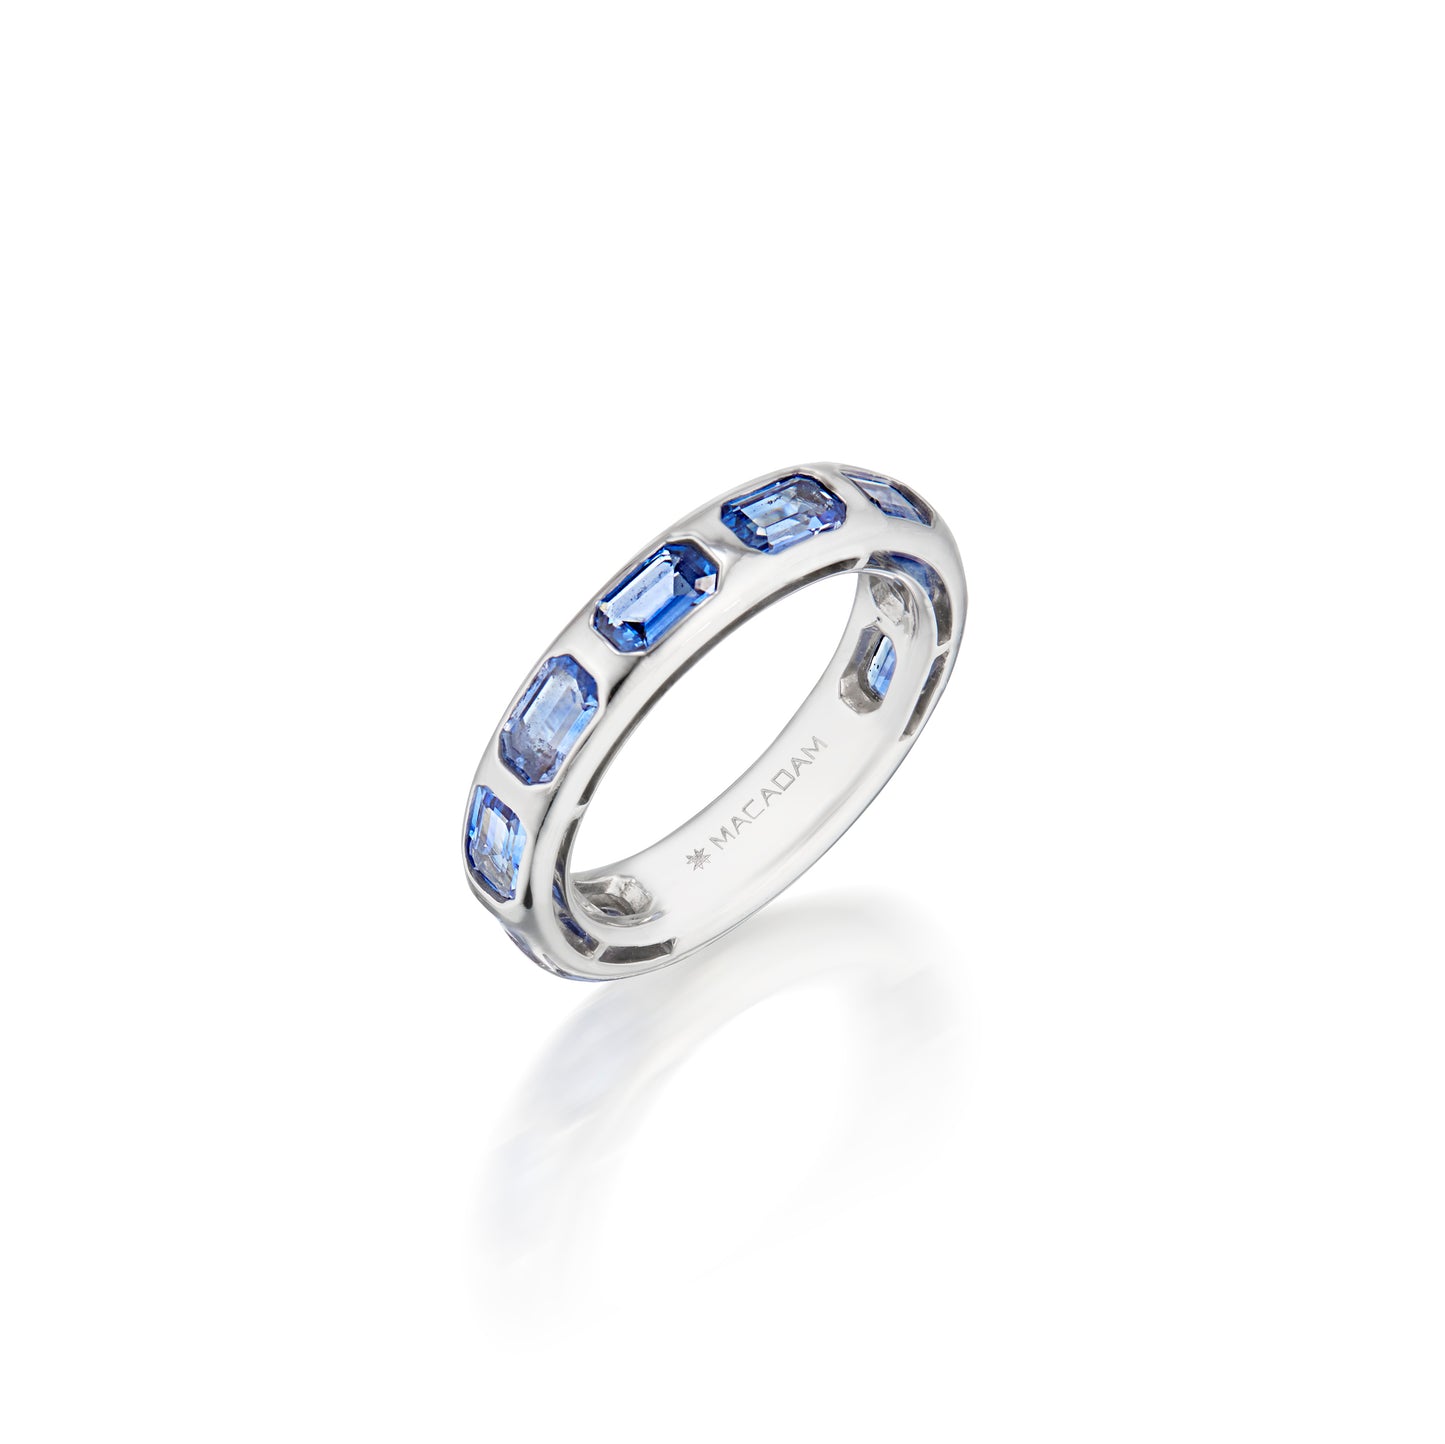 MACADAM HORIZON Emerald-Cut Blue Sapphire Ring